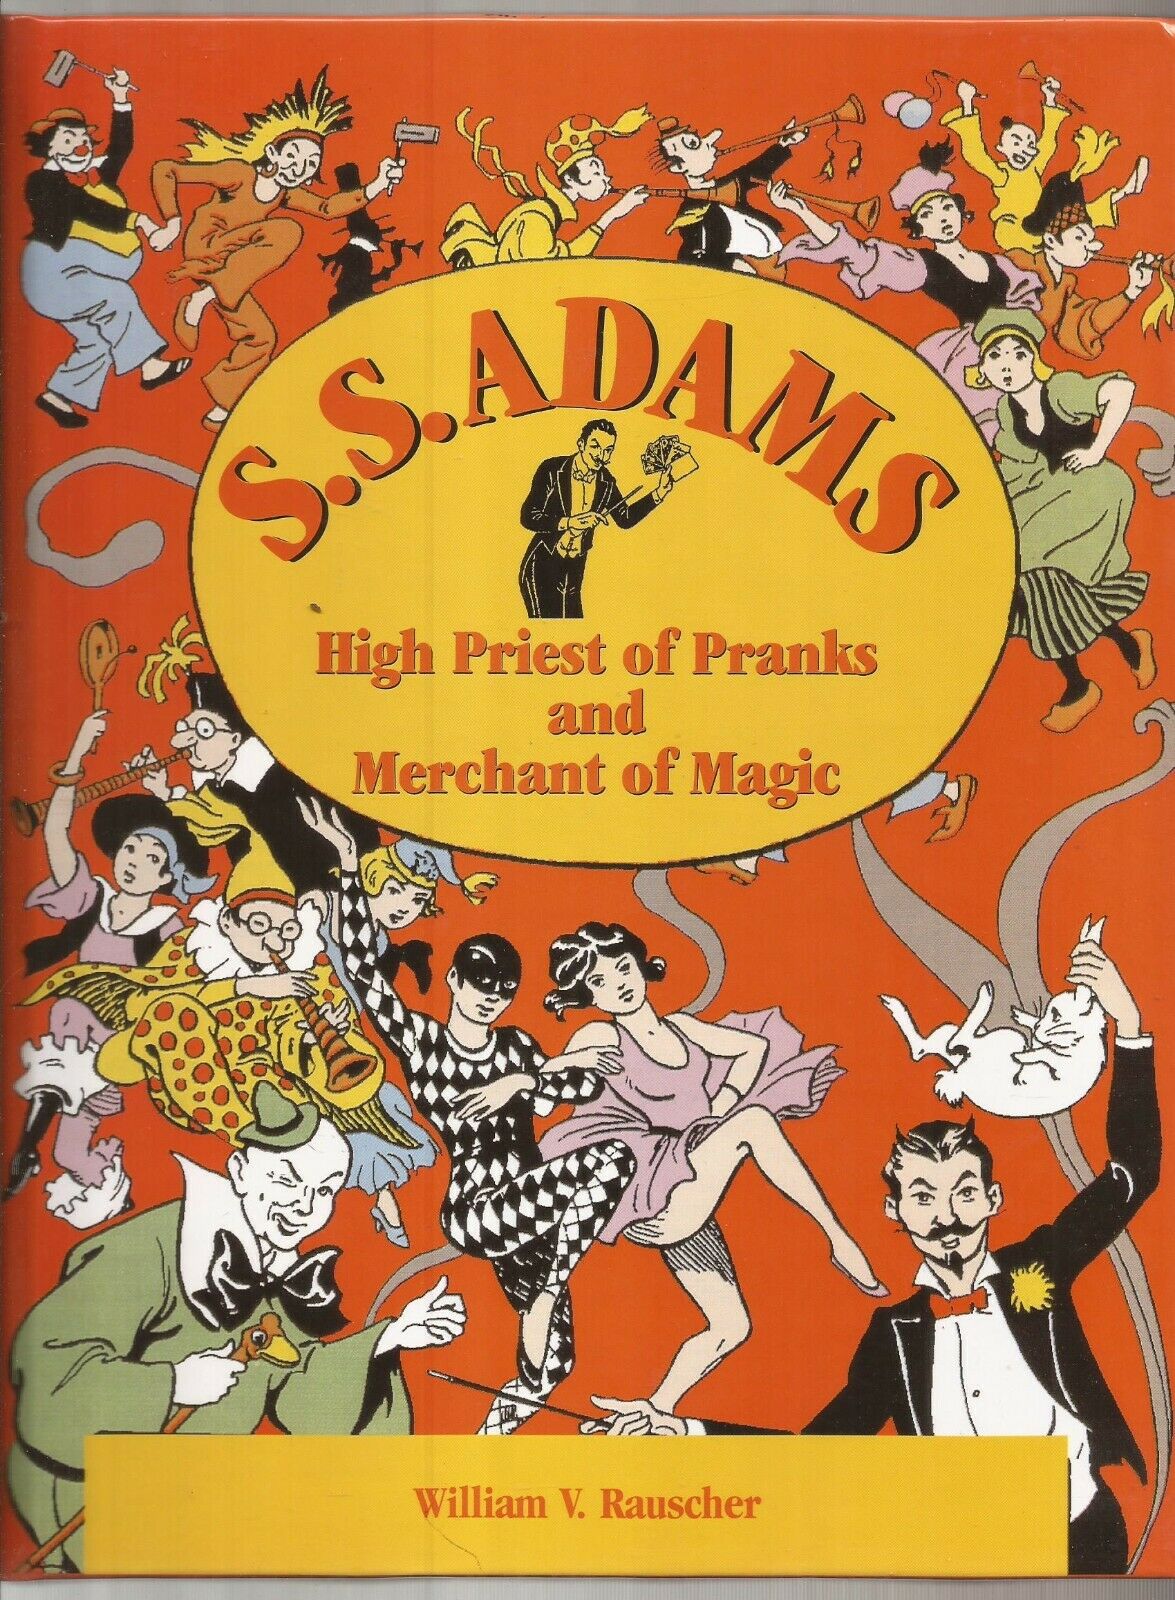 S.s. Adams High Priest Of Pranks & Merchant Of Magic By William V. Rauscher